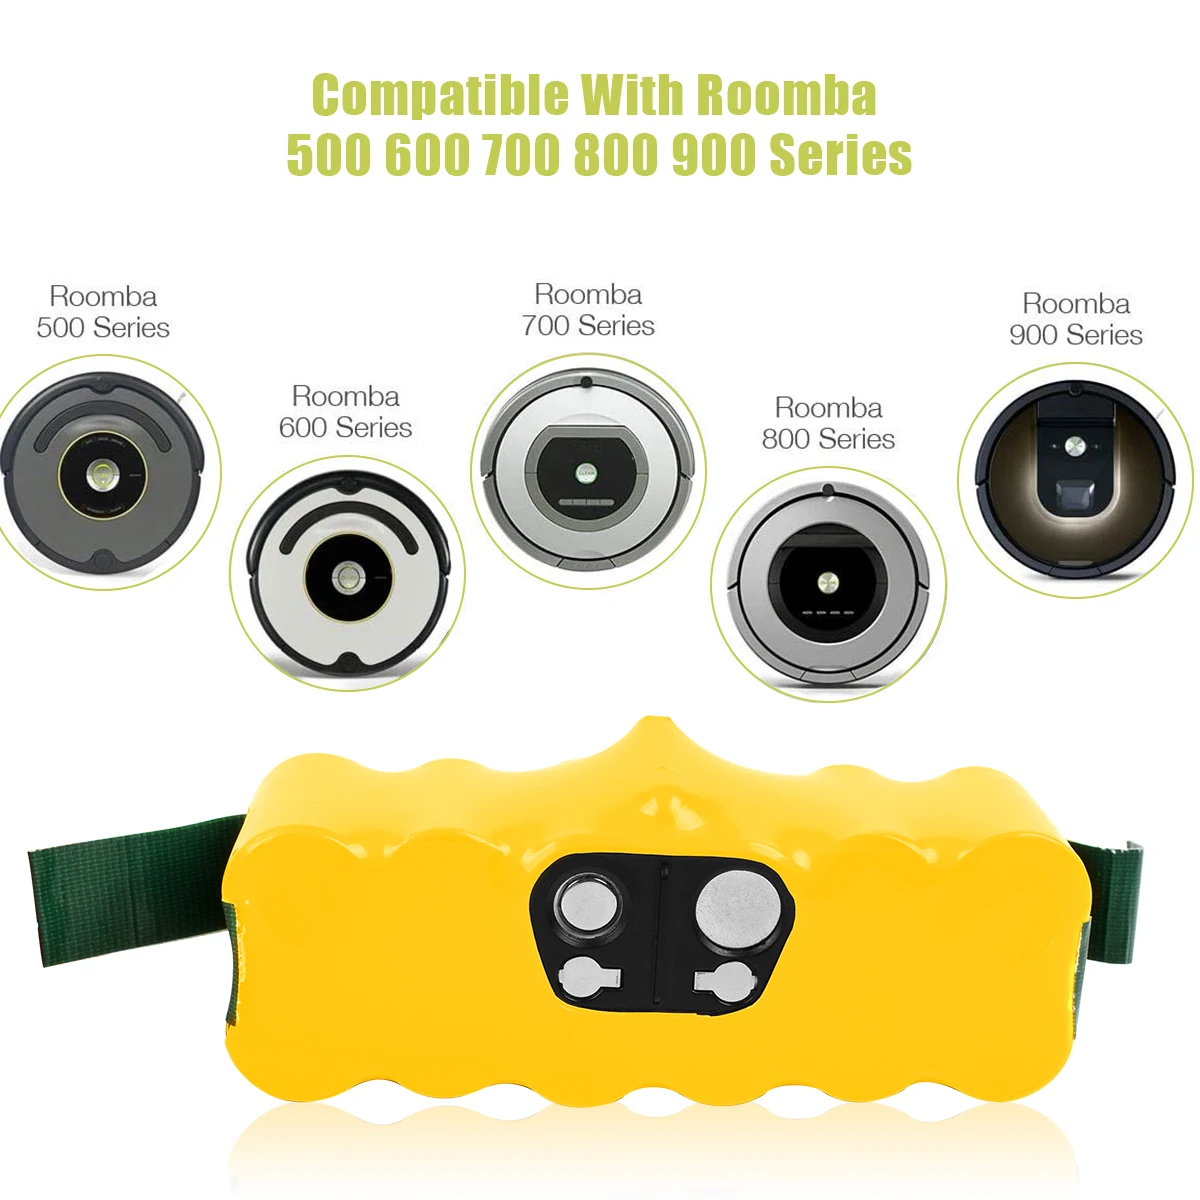 Bonadget For iRobot Roomba500 Battery 14.4V 6.4Ah/5.0Ah/3.8Ah  For  Roomba Vacuum Cleaner 500 600 700 800 Rechargeable Battery